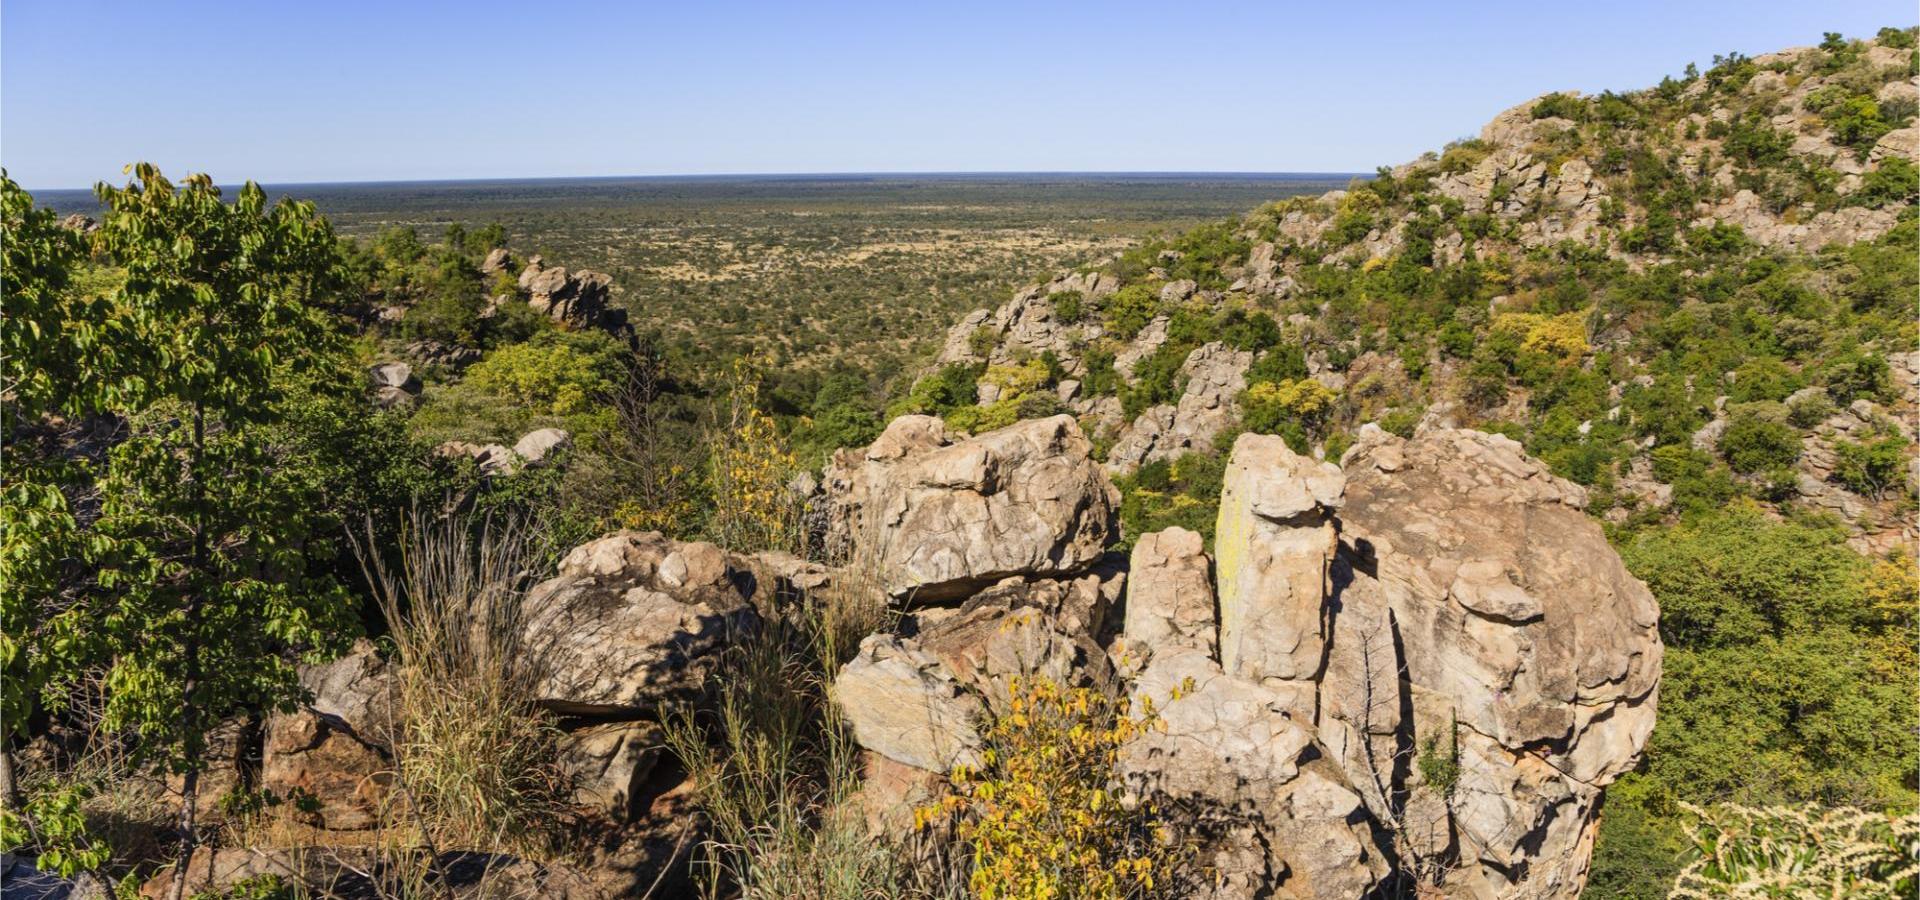 Panorama der Tsodilo Hills, Weltkulturerbe der UNESCO in Botswana